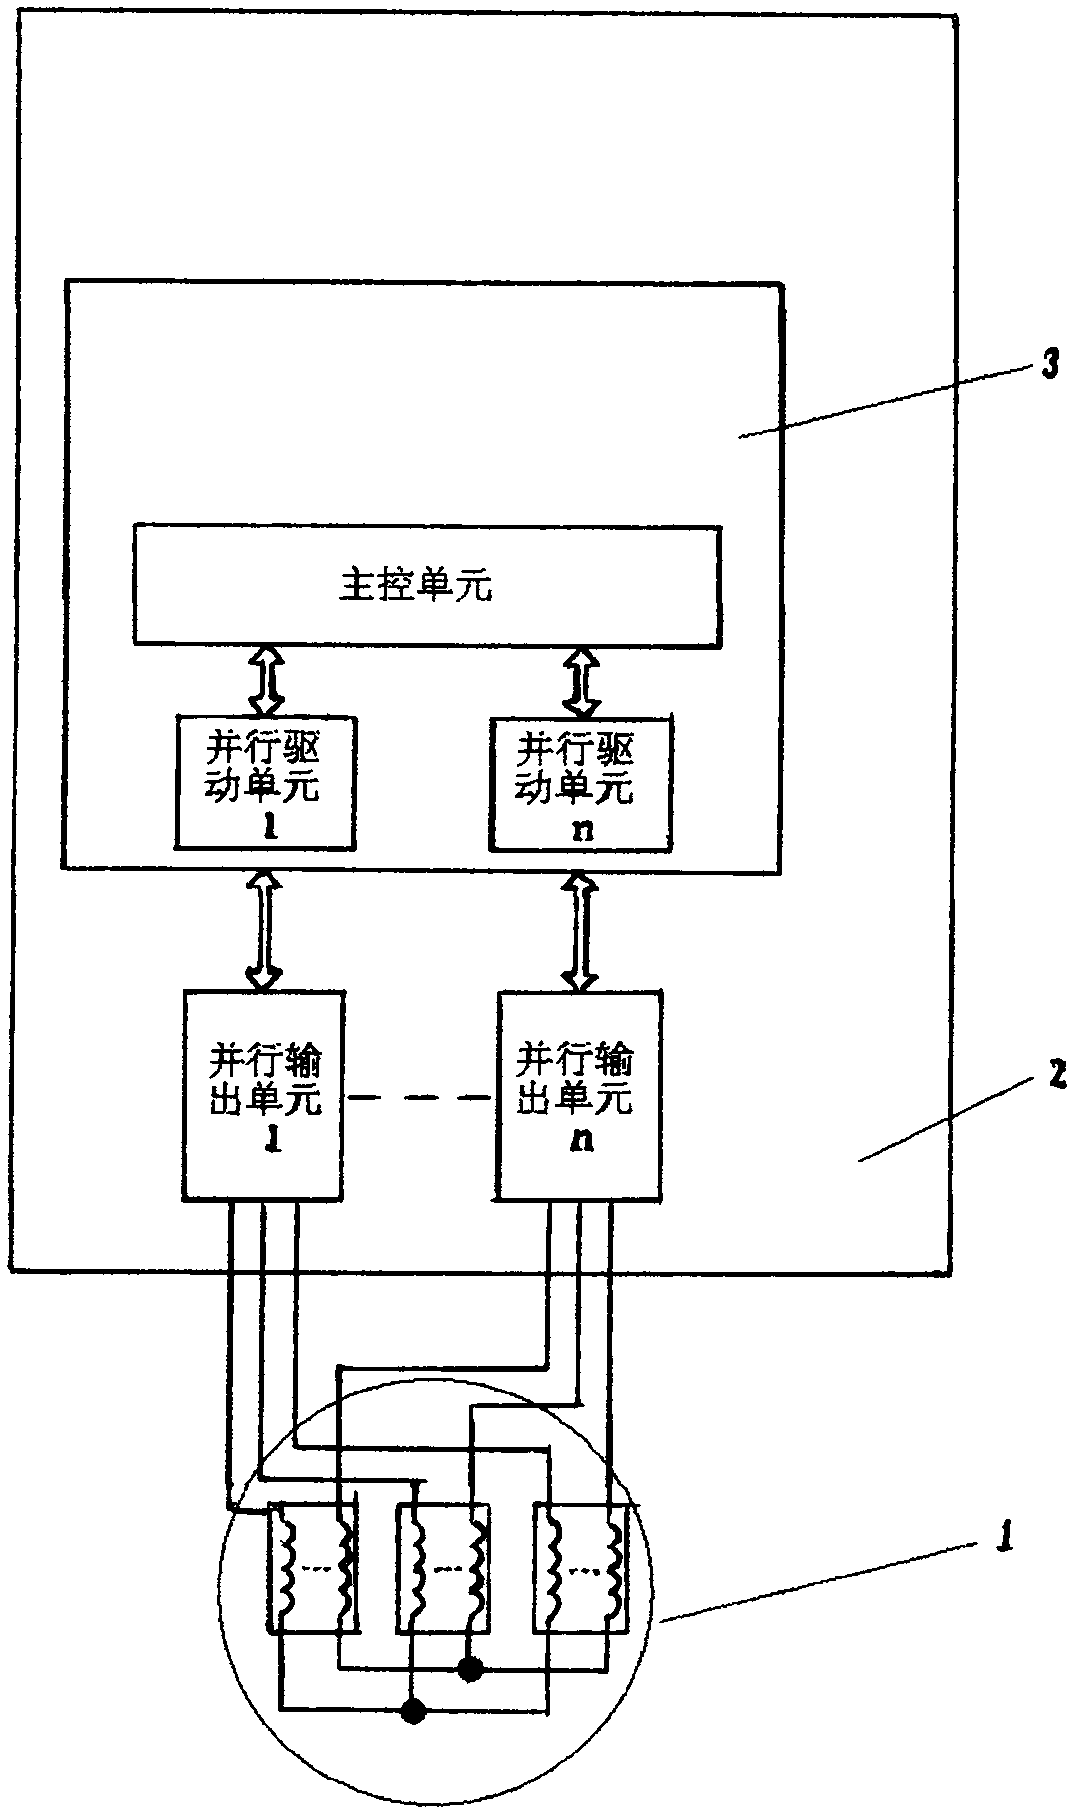 Single-machine multi-drive and multi-winding motor system